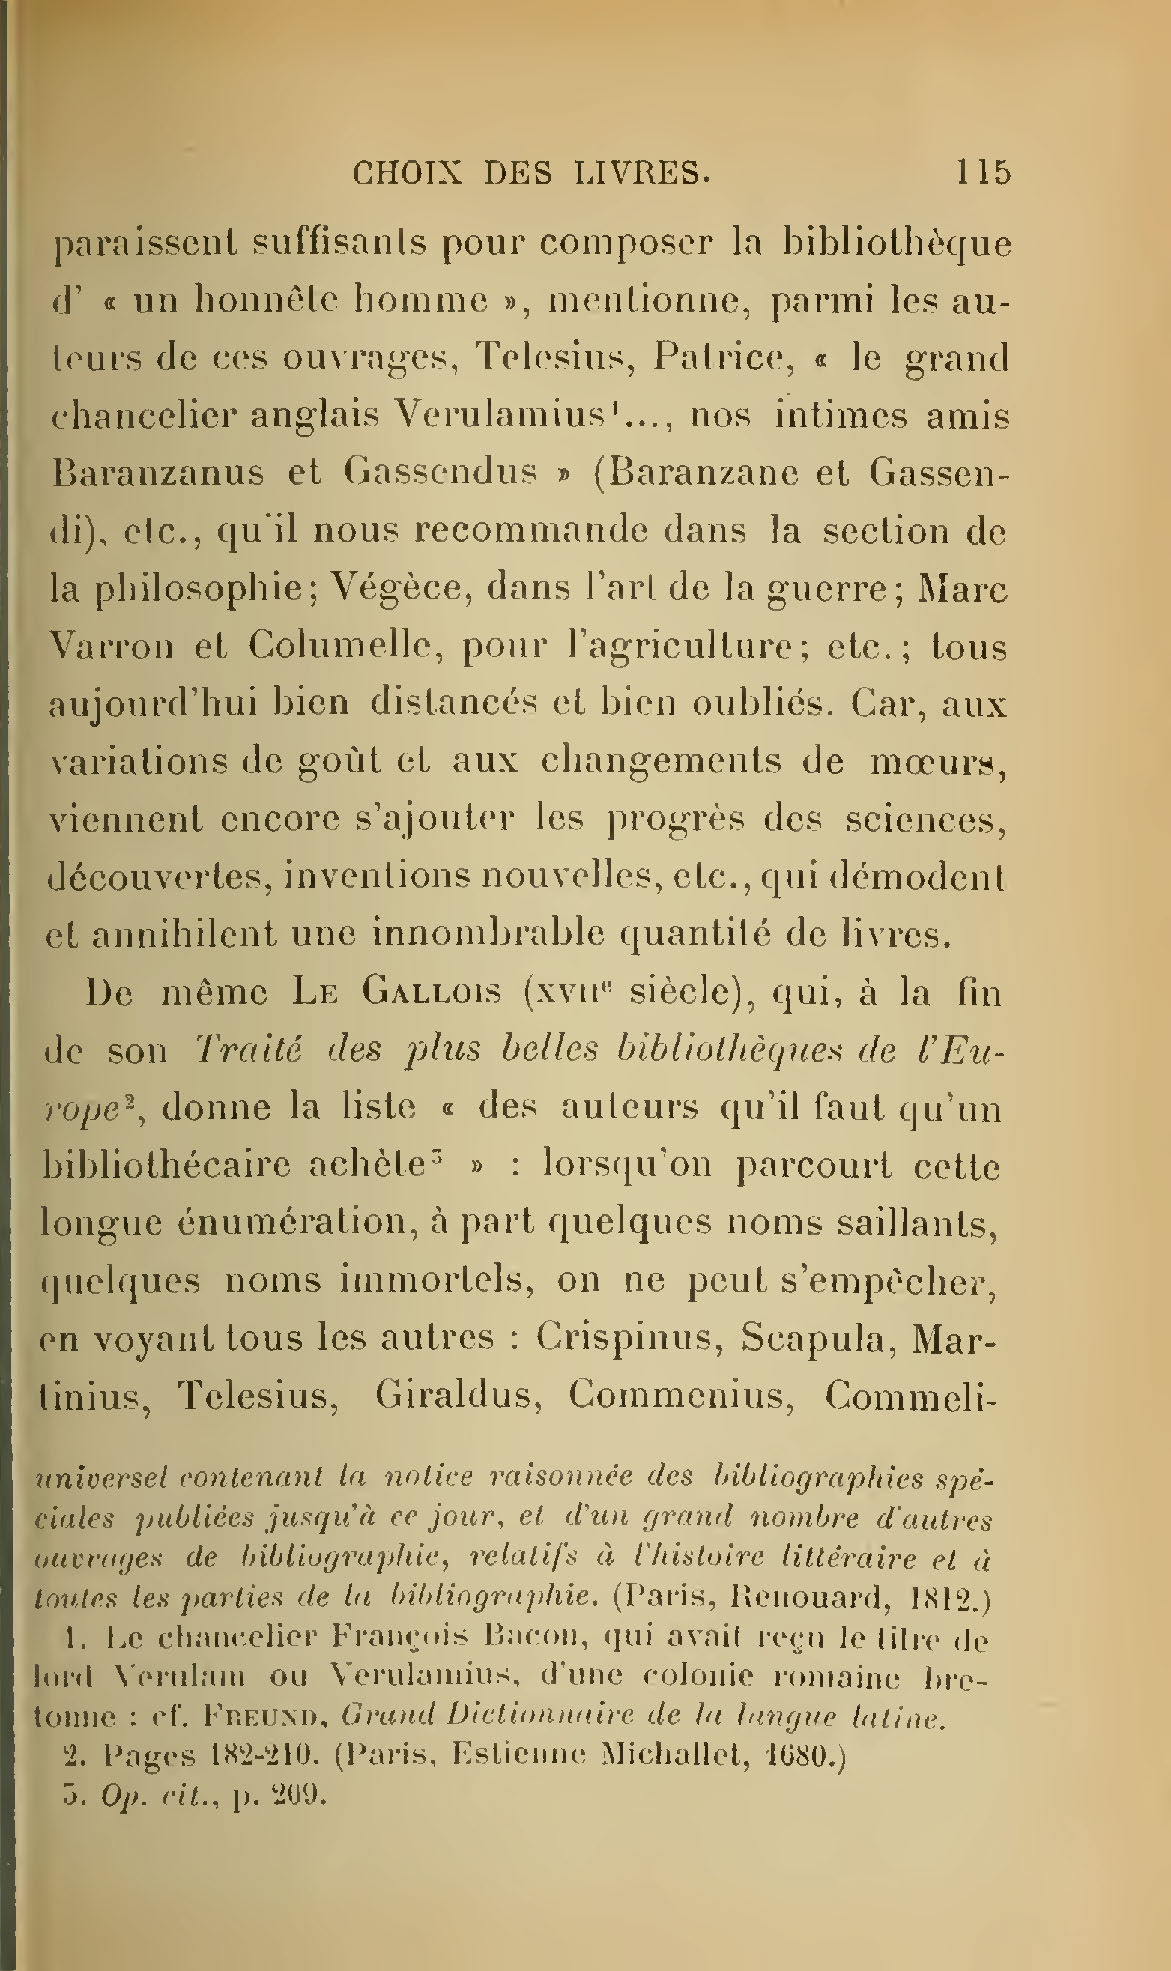 Albert Cim, Le Livre, t. II, p. 115.